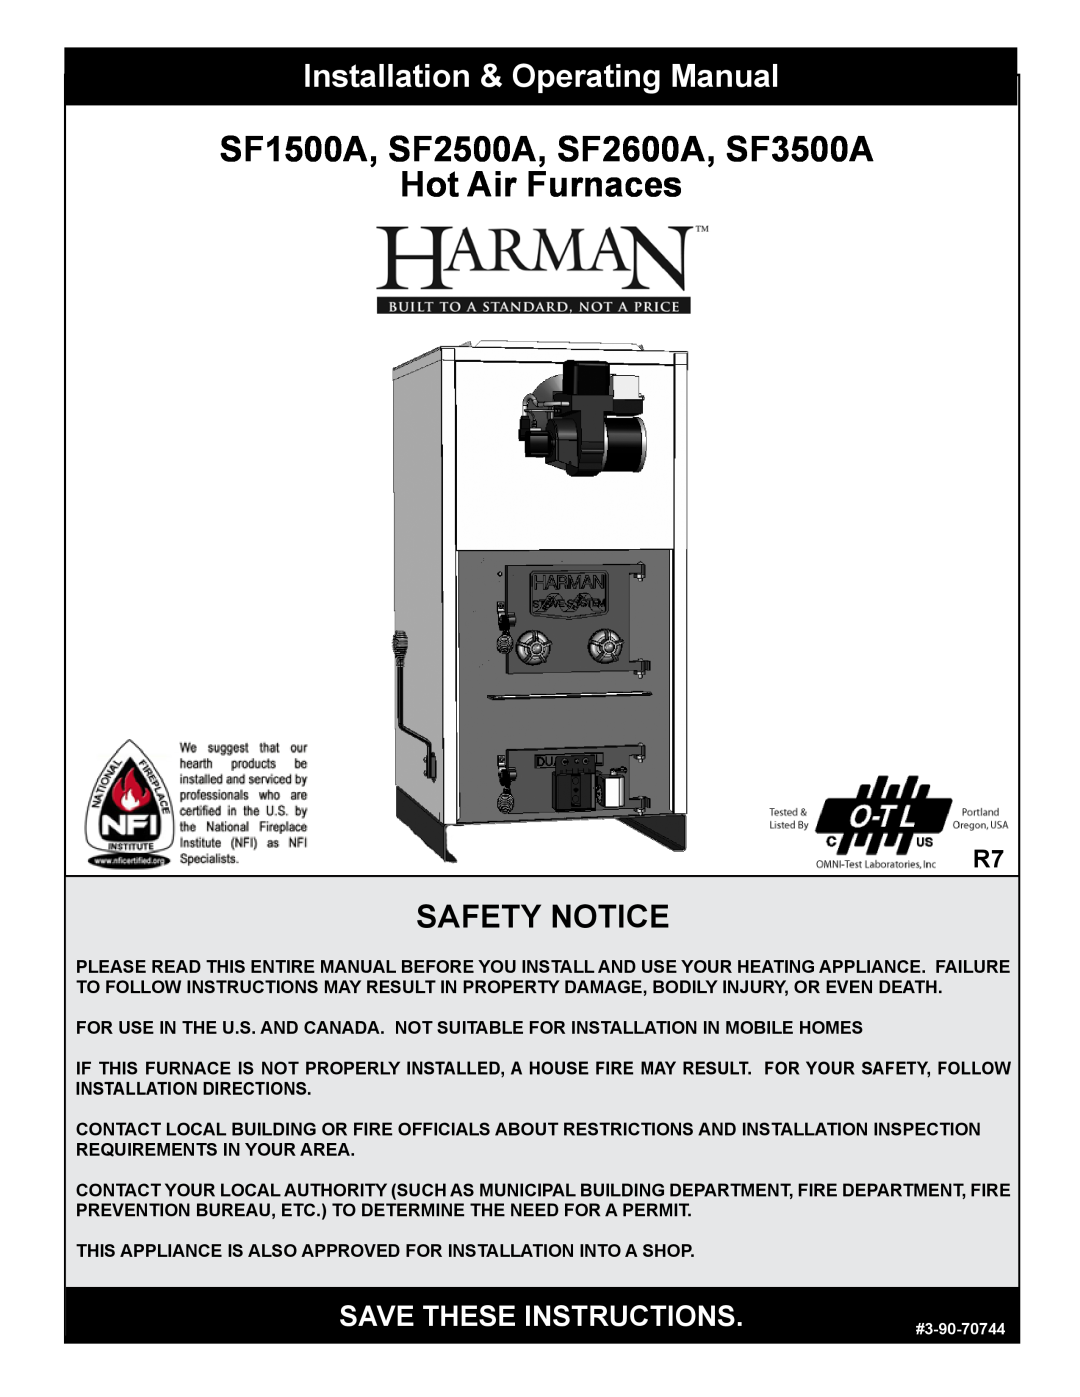 Harman Stove Company manual SF1500A, SF2500A, SF2600A, SF3500A, Hot Air Furnaces, Installation & Operating Manual 